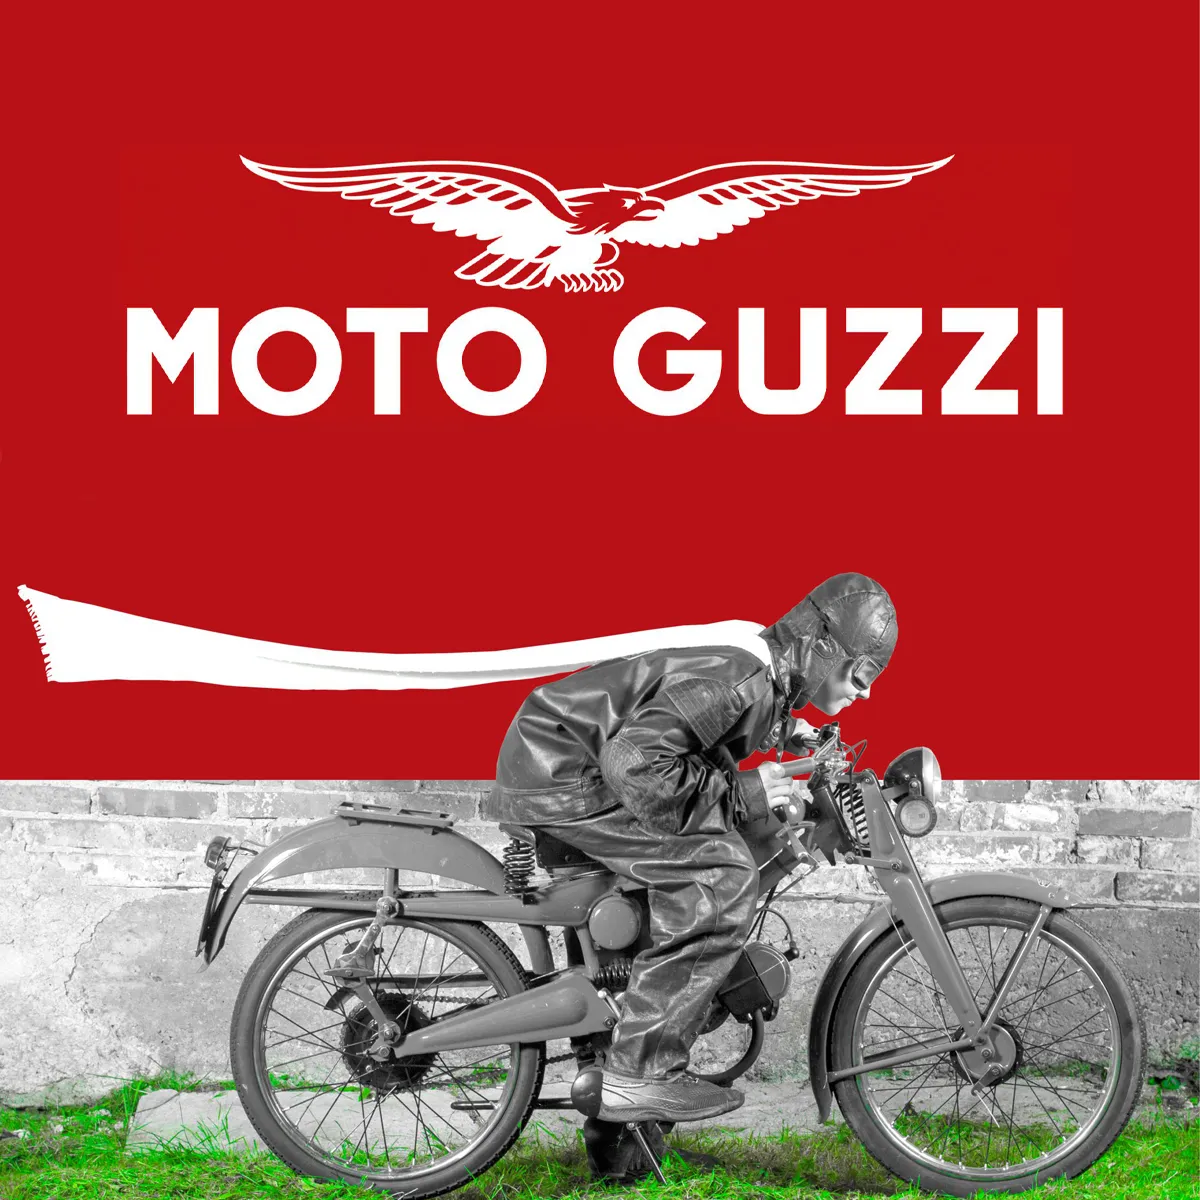 Moto Guzzi - Včera a dnes. Ilustračný obrázok k výstave